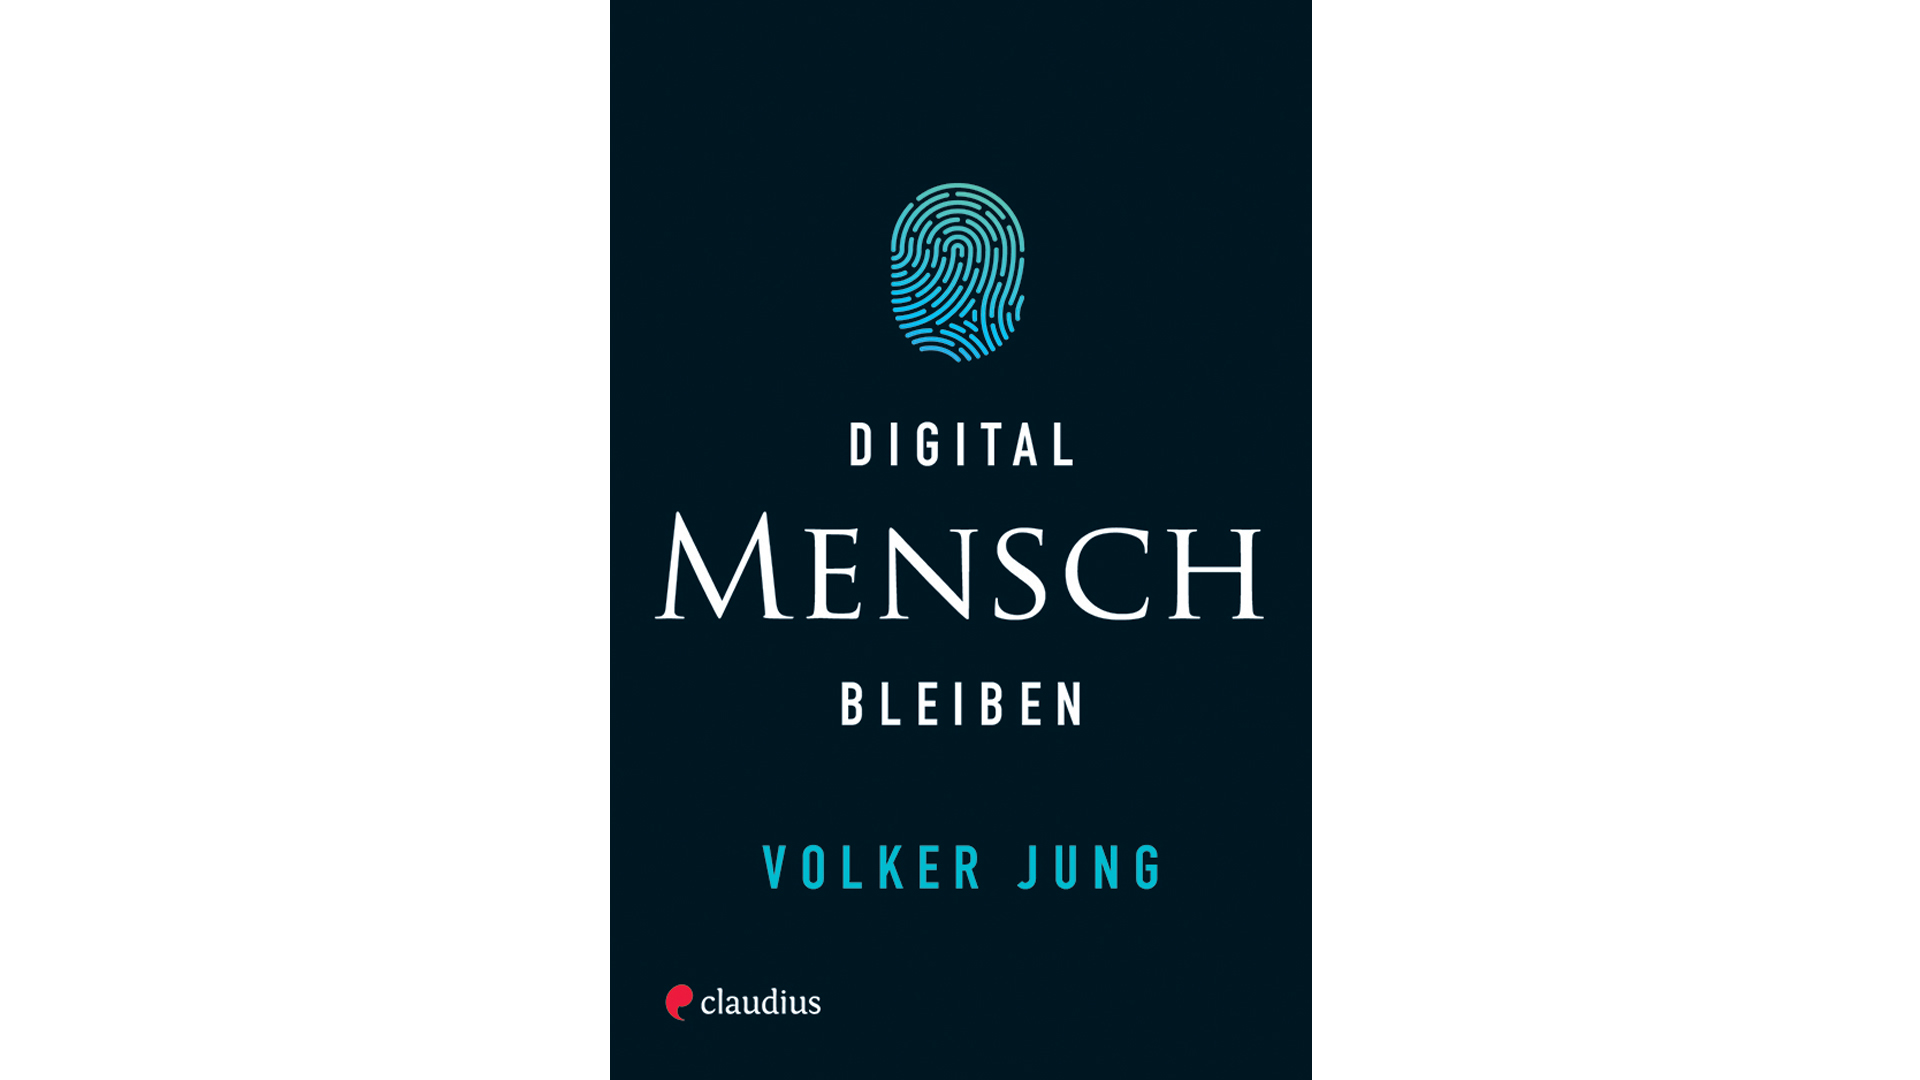 Volker Jung: „Digital Mensch bleiben“, Claudius, 136 Seiten, 14 Euro, ISBN 9783532628263